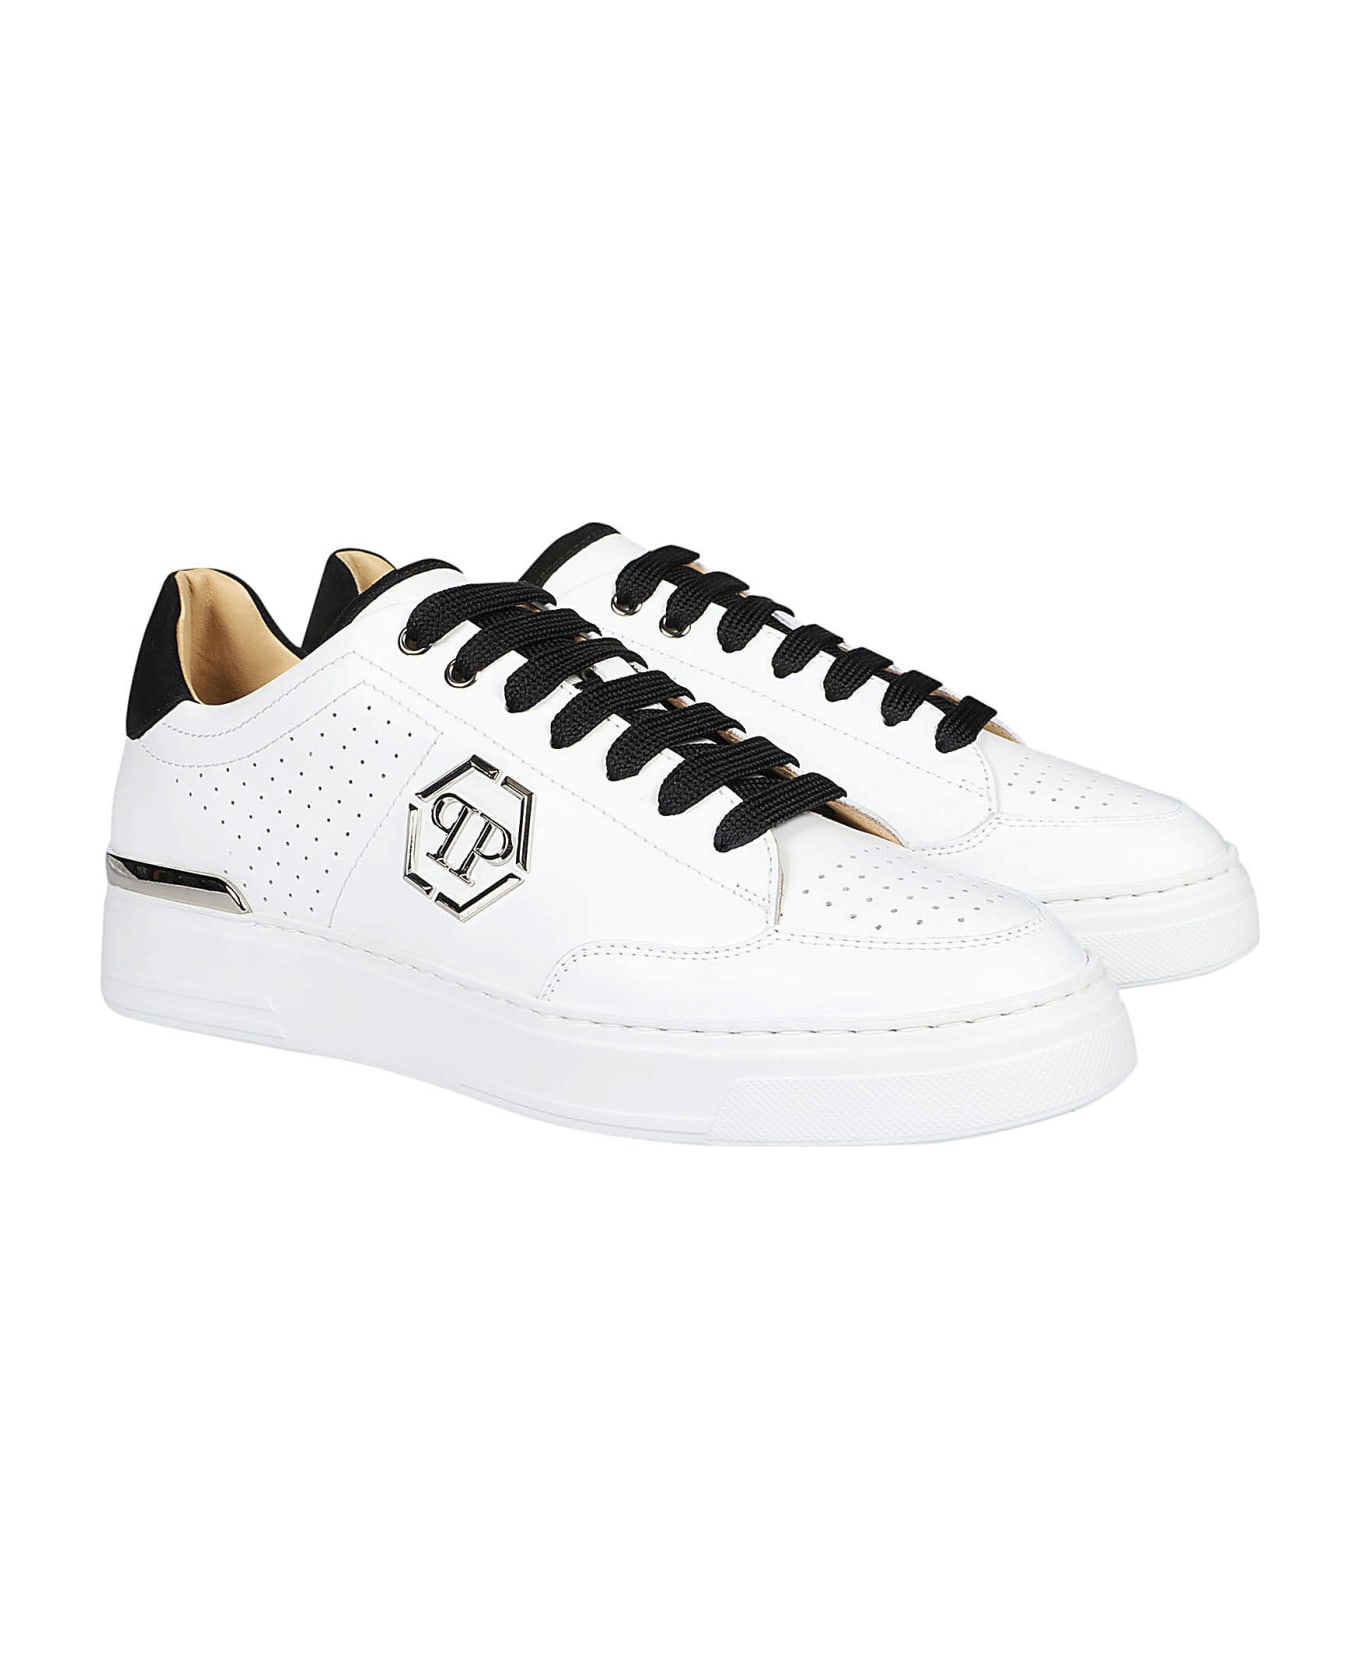 Philipp Plein Low Top Sneakers - White/black